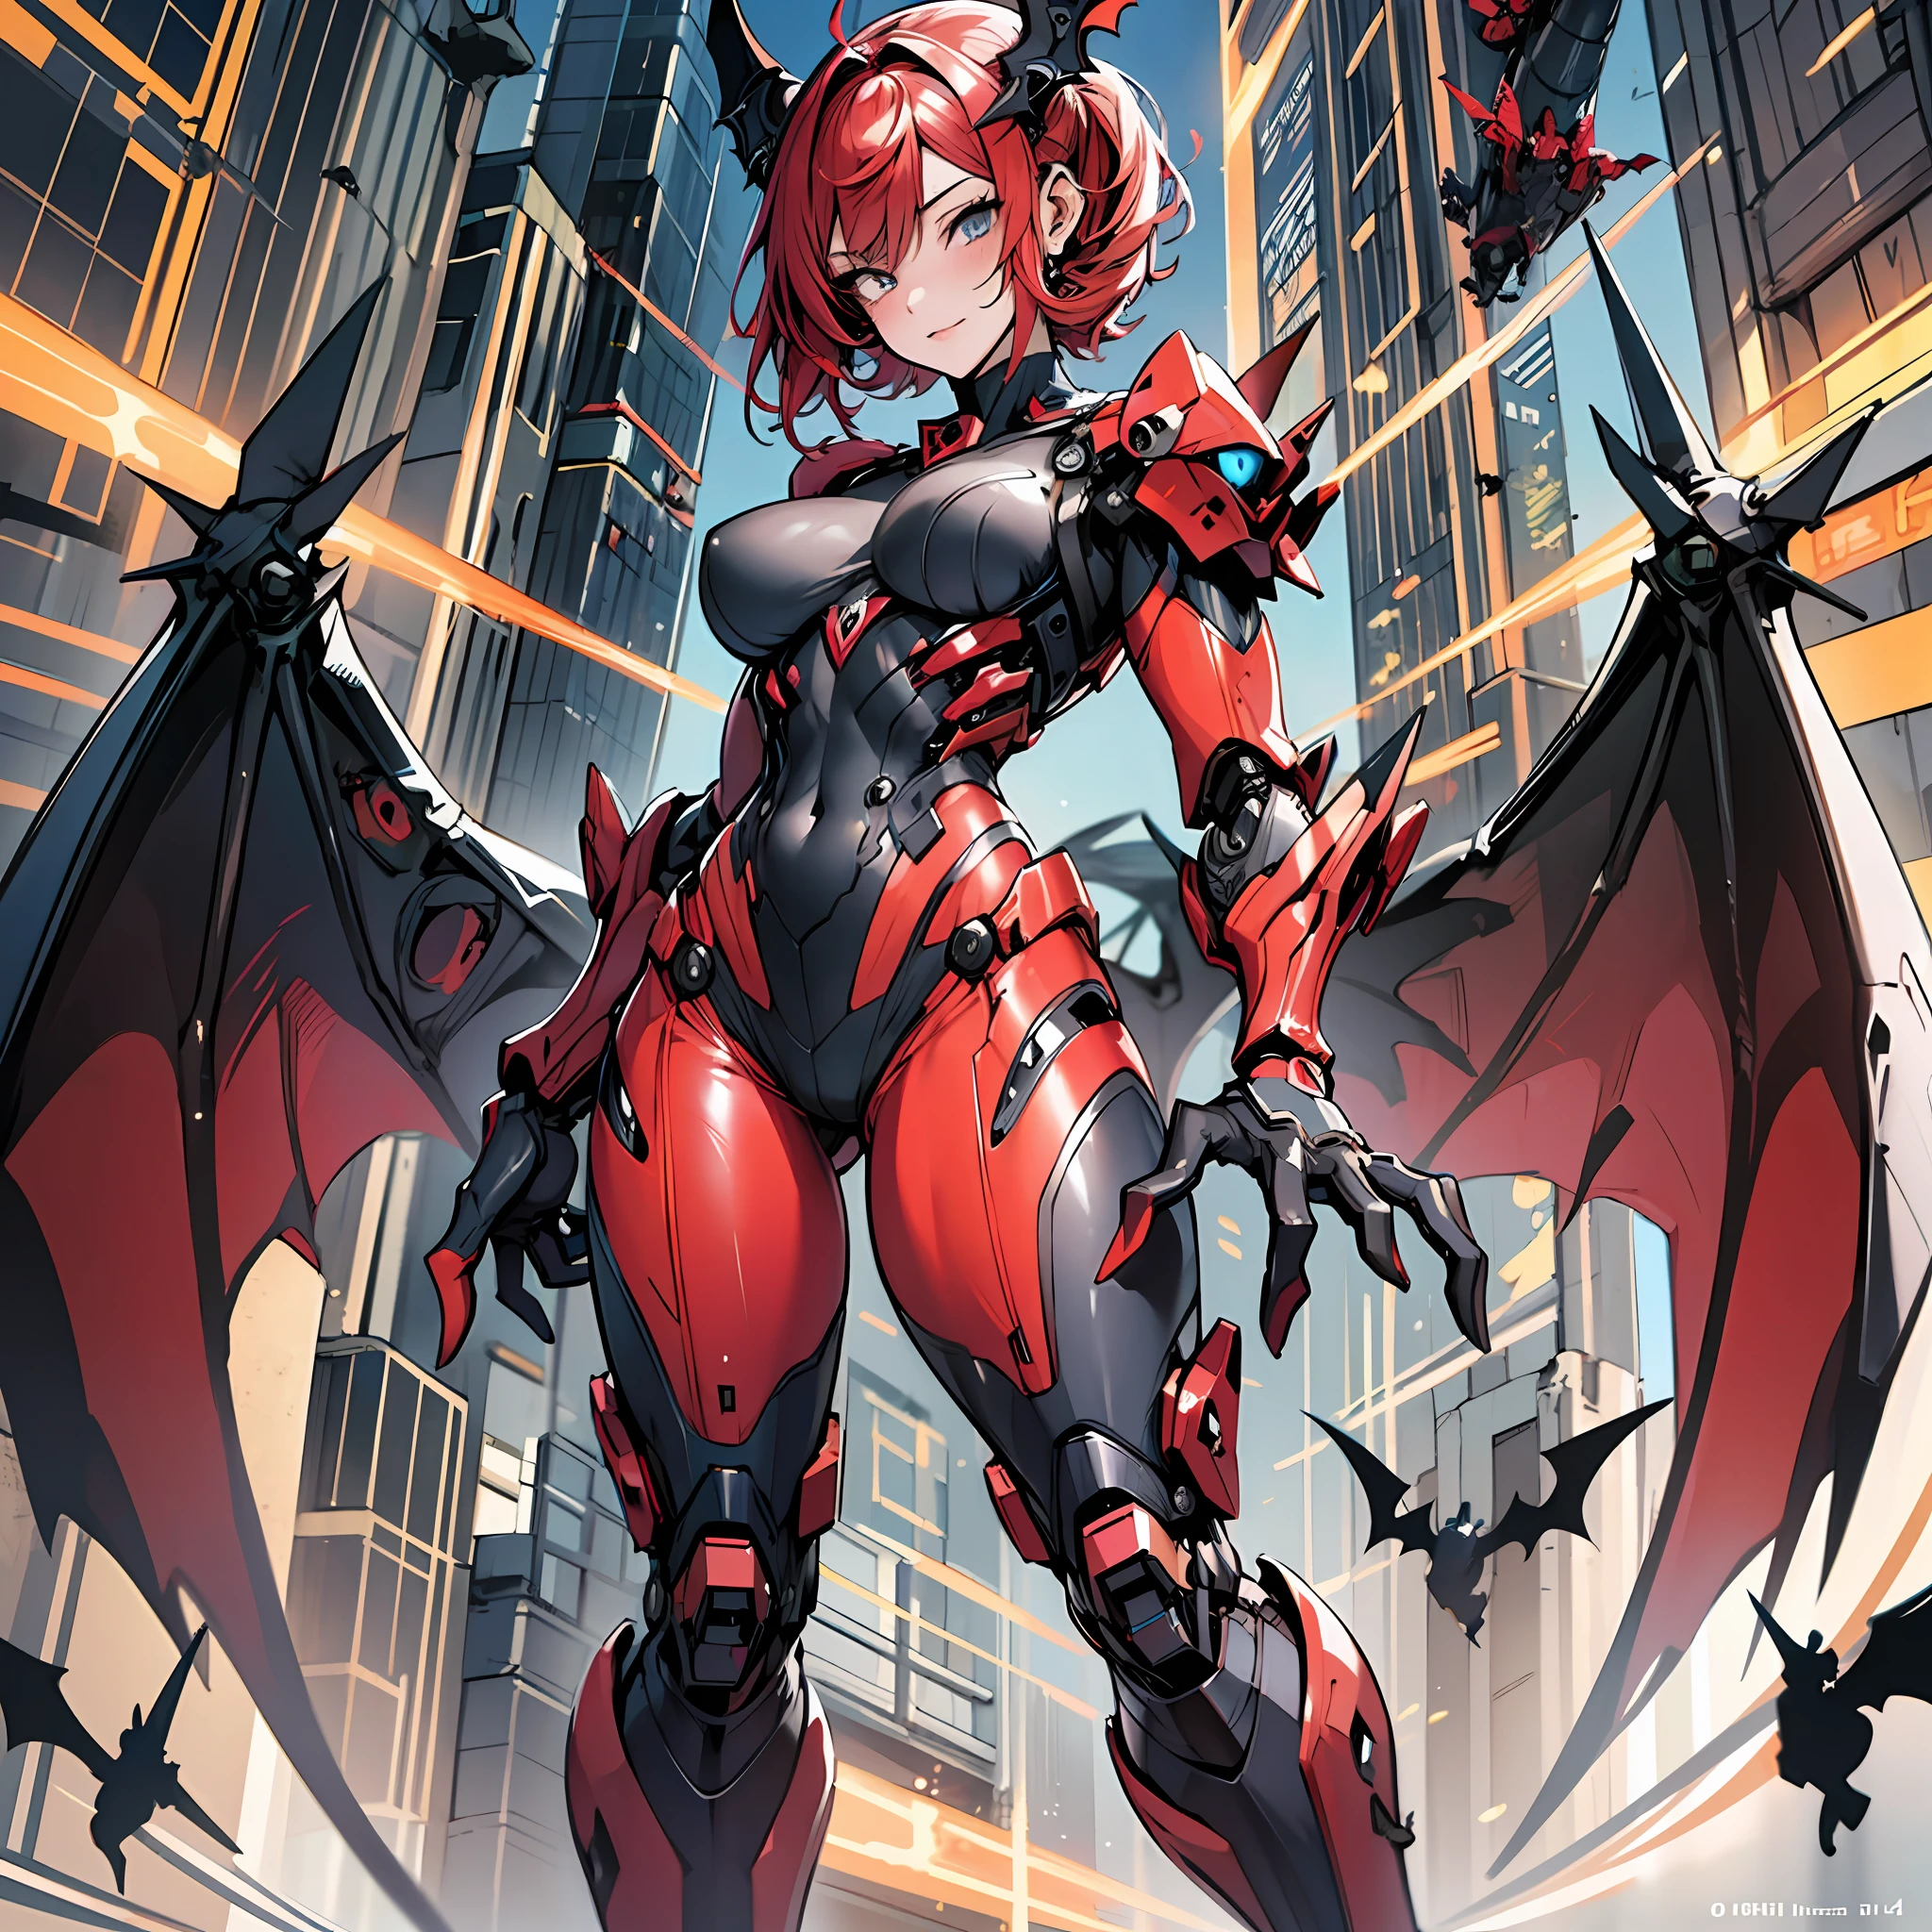 Woman in bat color costume, best anime 4K wallpaper, full body, bat red wing, cyberpunk bat, mechanized valkyrie girl, biomechanical, highly detailed artgerm based on bat, cyborg bat, anime style 4k, bat